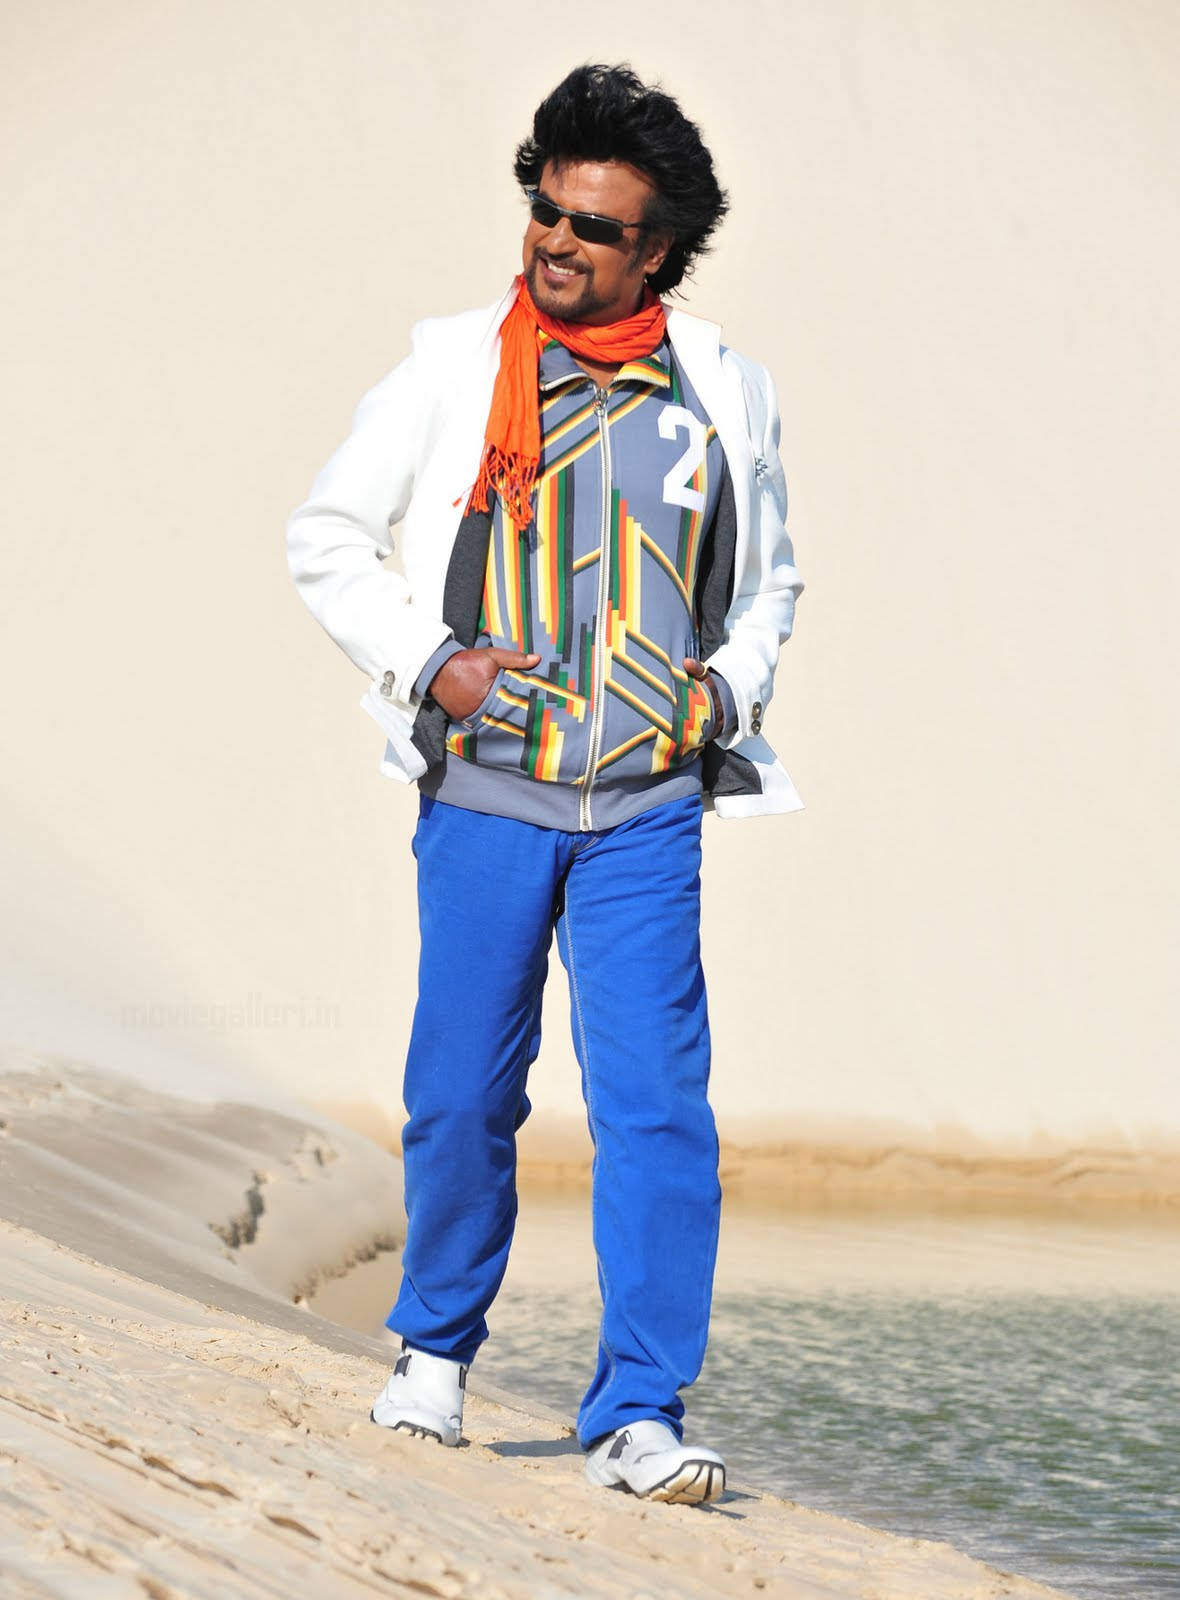 Rajinikanth, Indian Superstar, Boldly Trekking Across Desert Dunes. Background